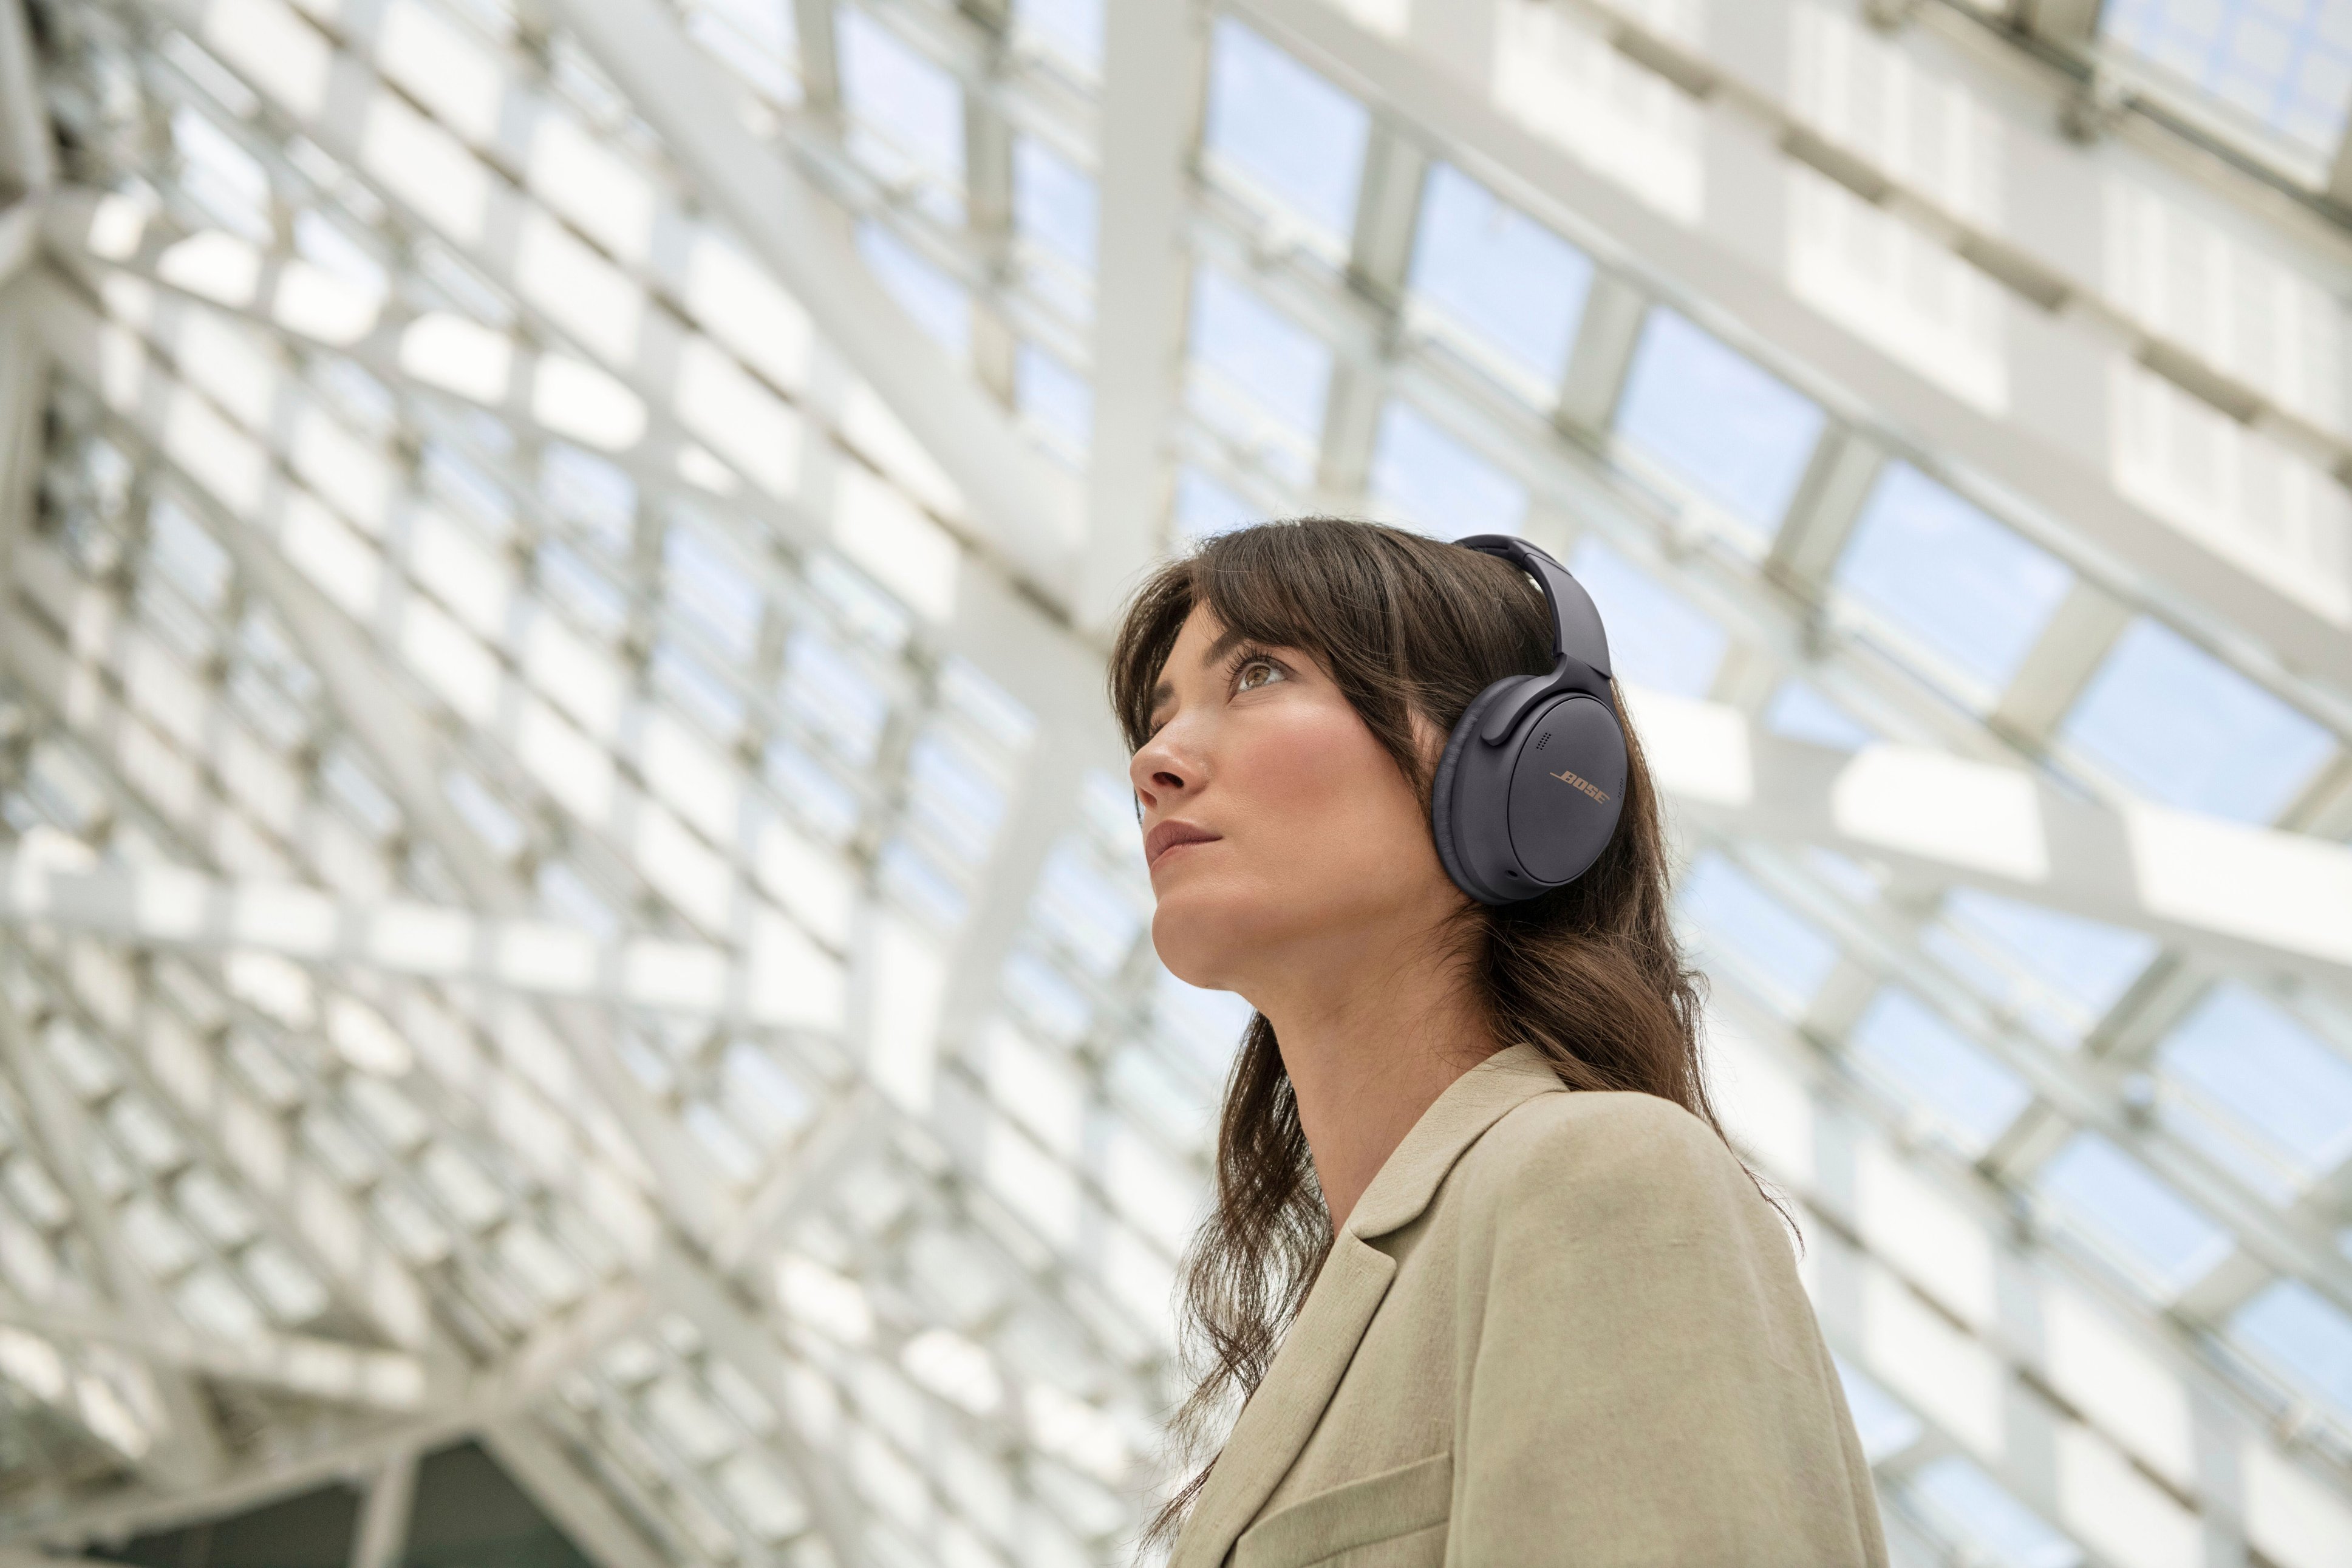 Bose QuietComfort 45 Wireless Noise Cancelling Over-the-Ear Headphones  Eclipse Grey 866724-0400 - Best Buy